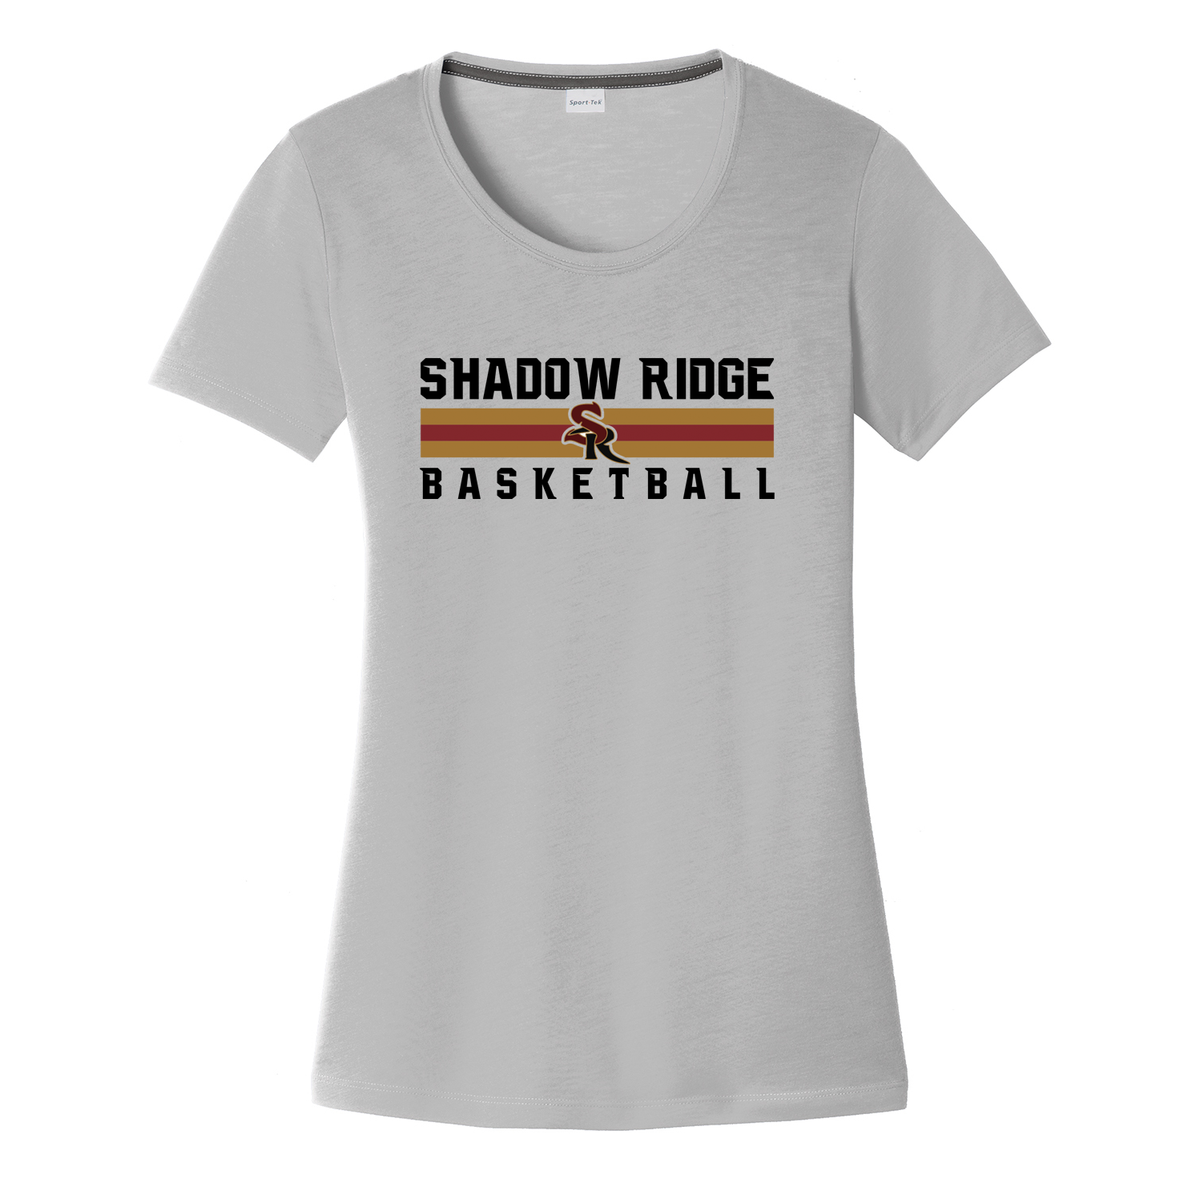 Shadow Ridge Basketball Women's CottonTouch Performance T-Shirt